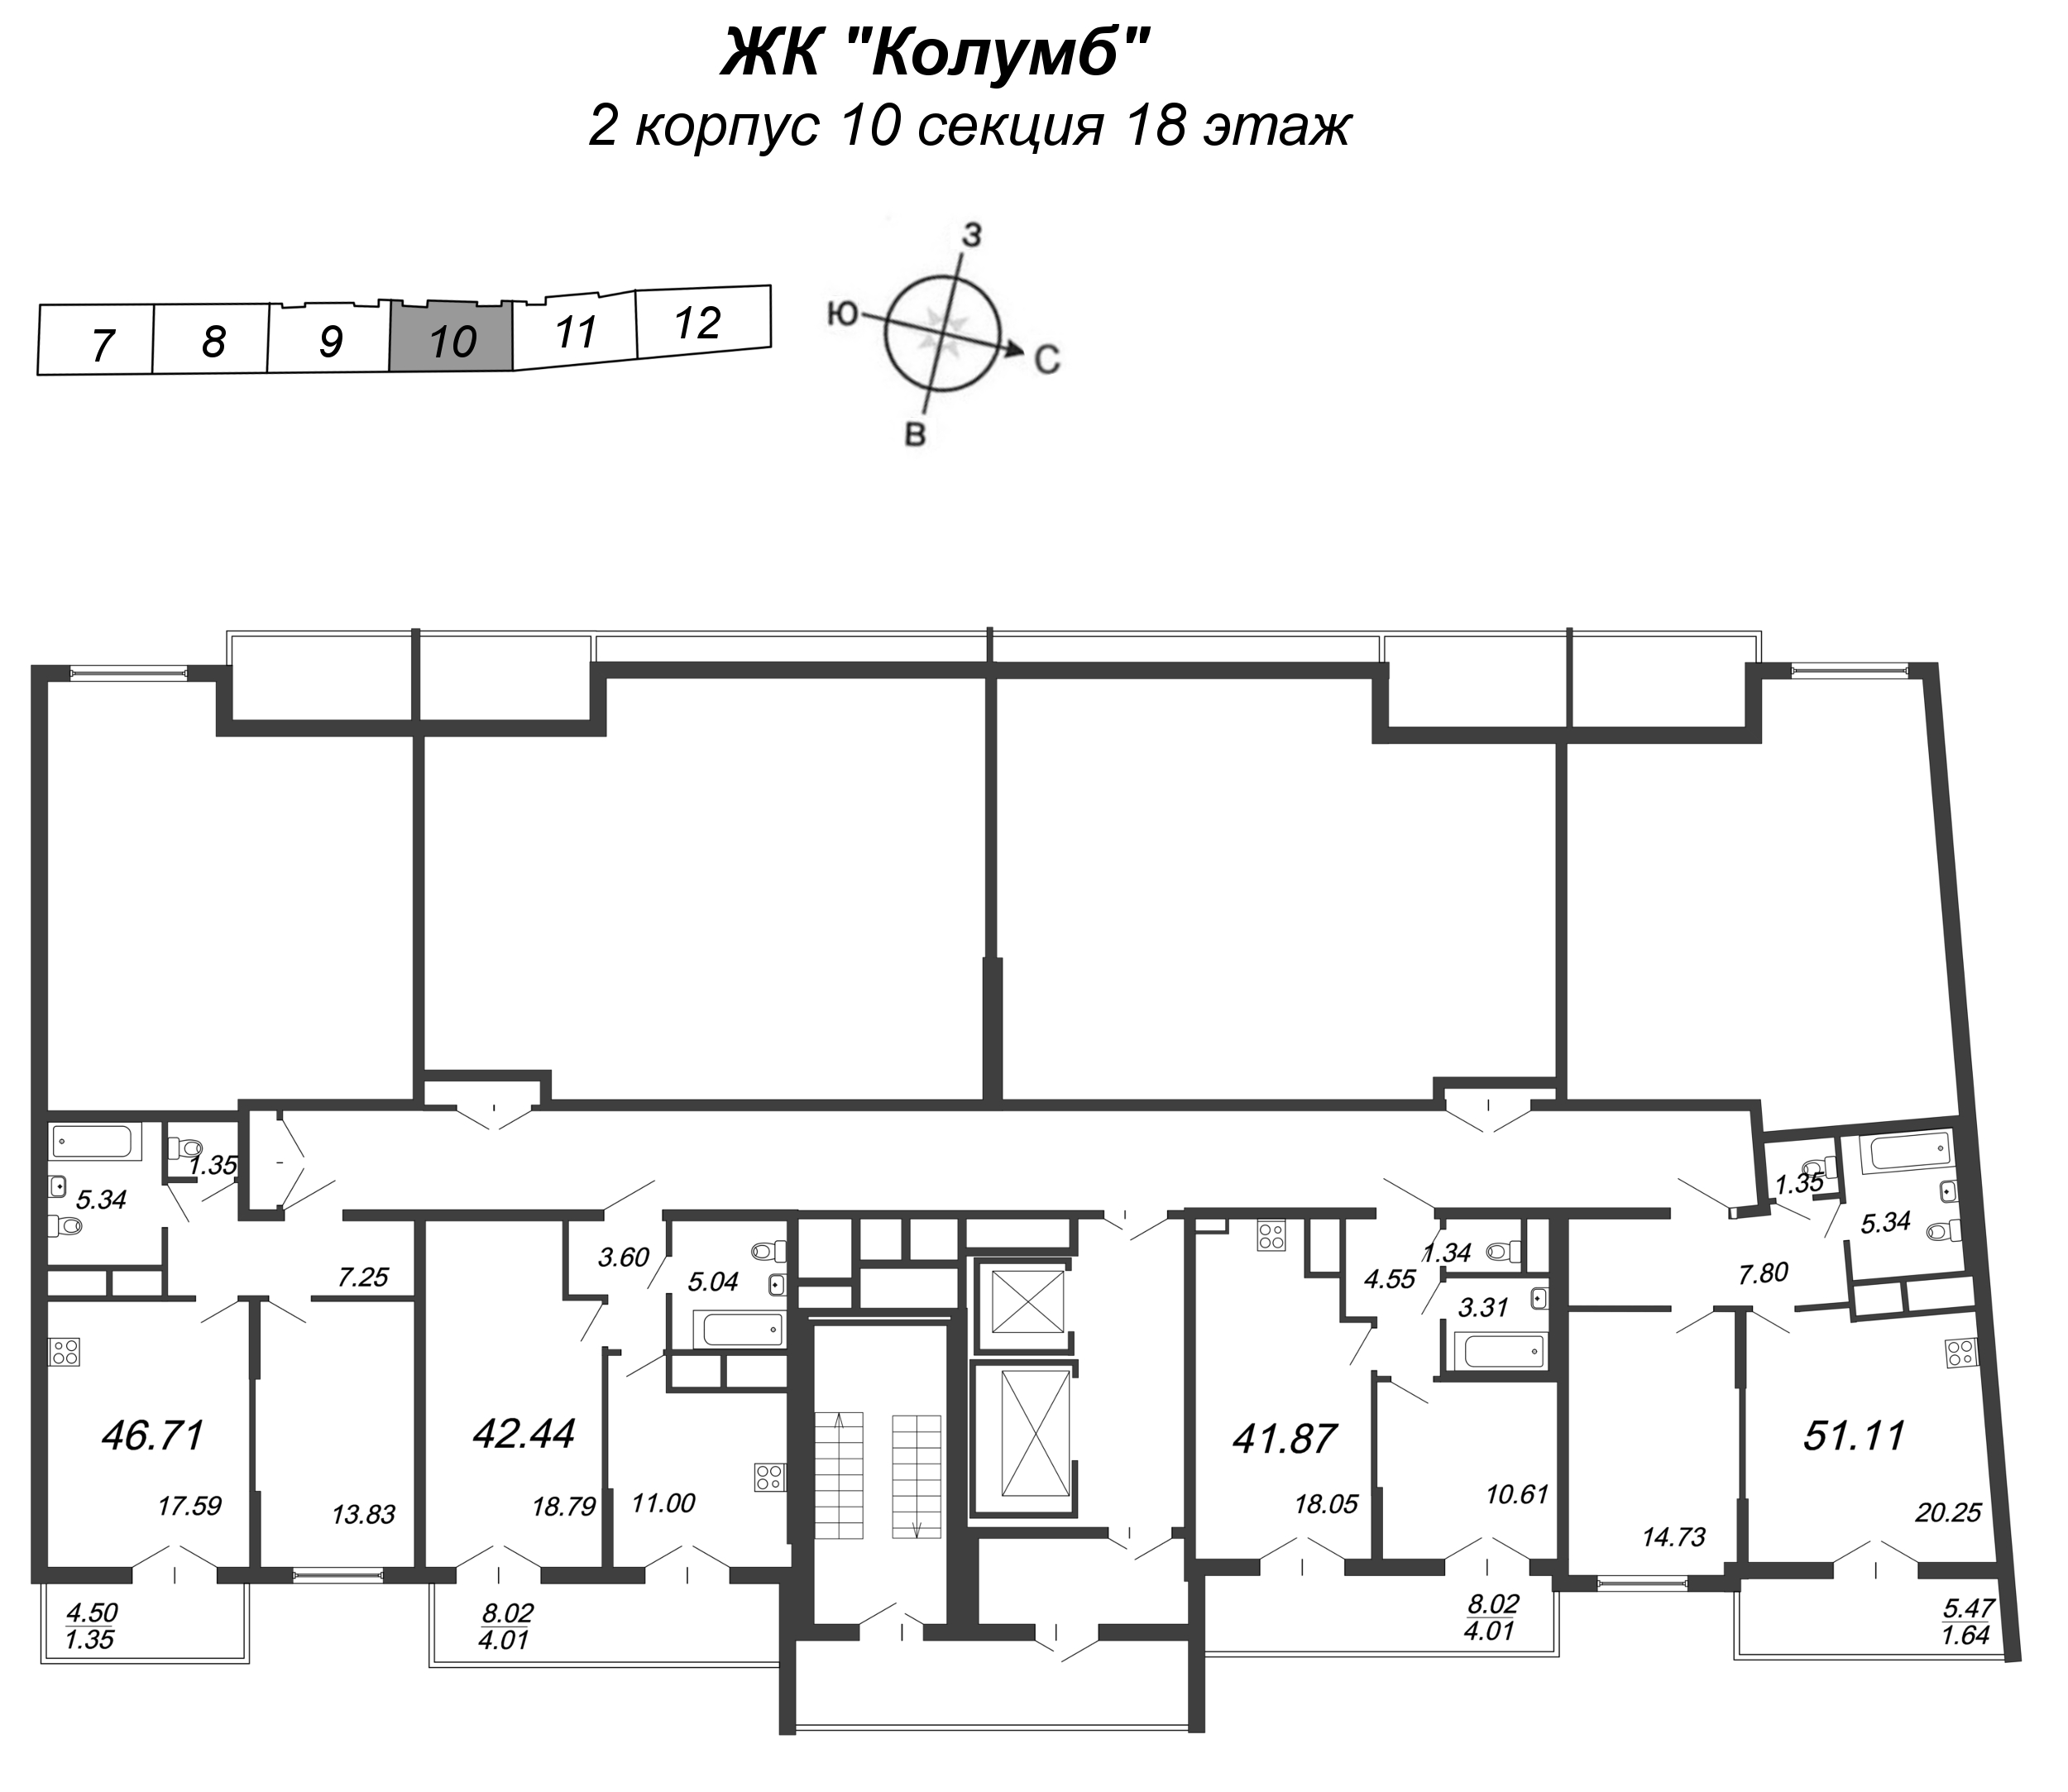 2-комнатная (Евро) квартира, 50.6 м² - планировка этажа